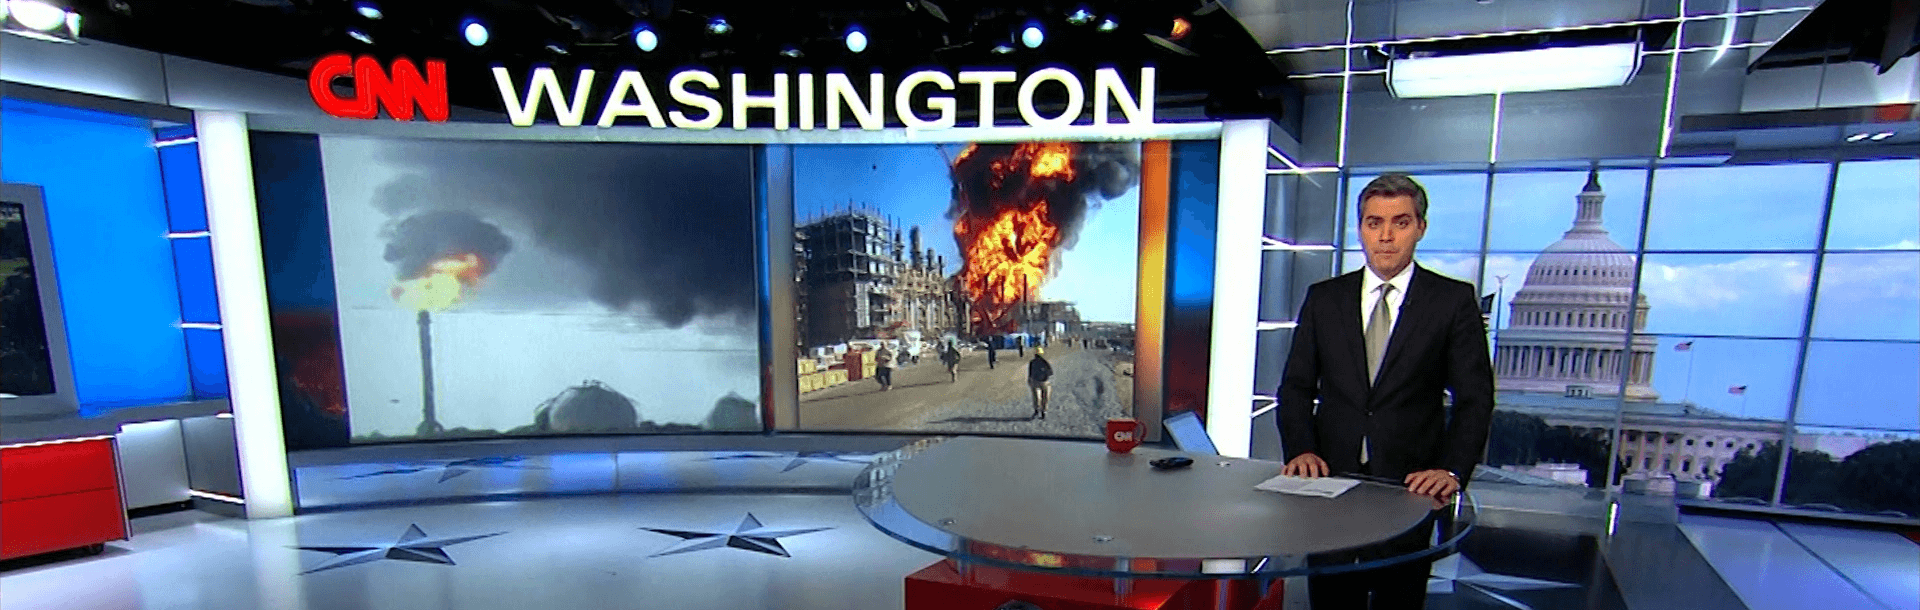 CNN explosion footage